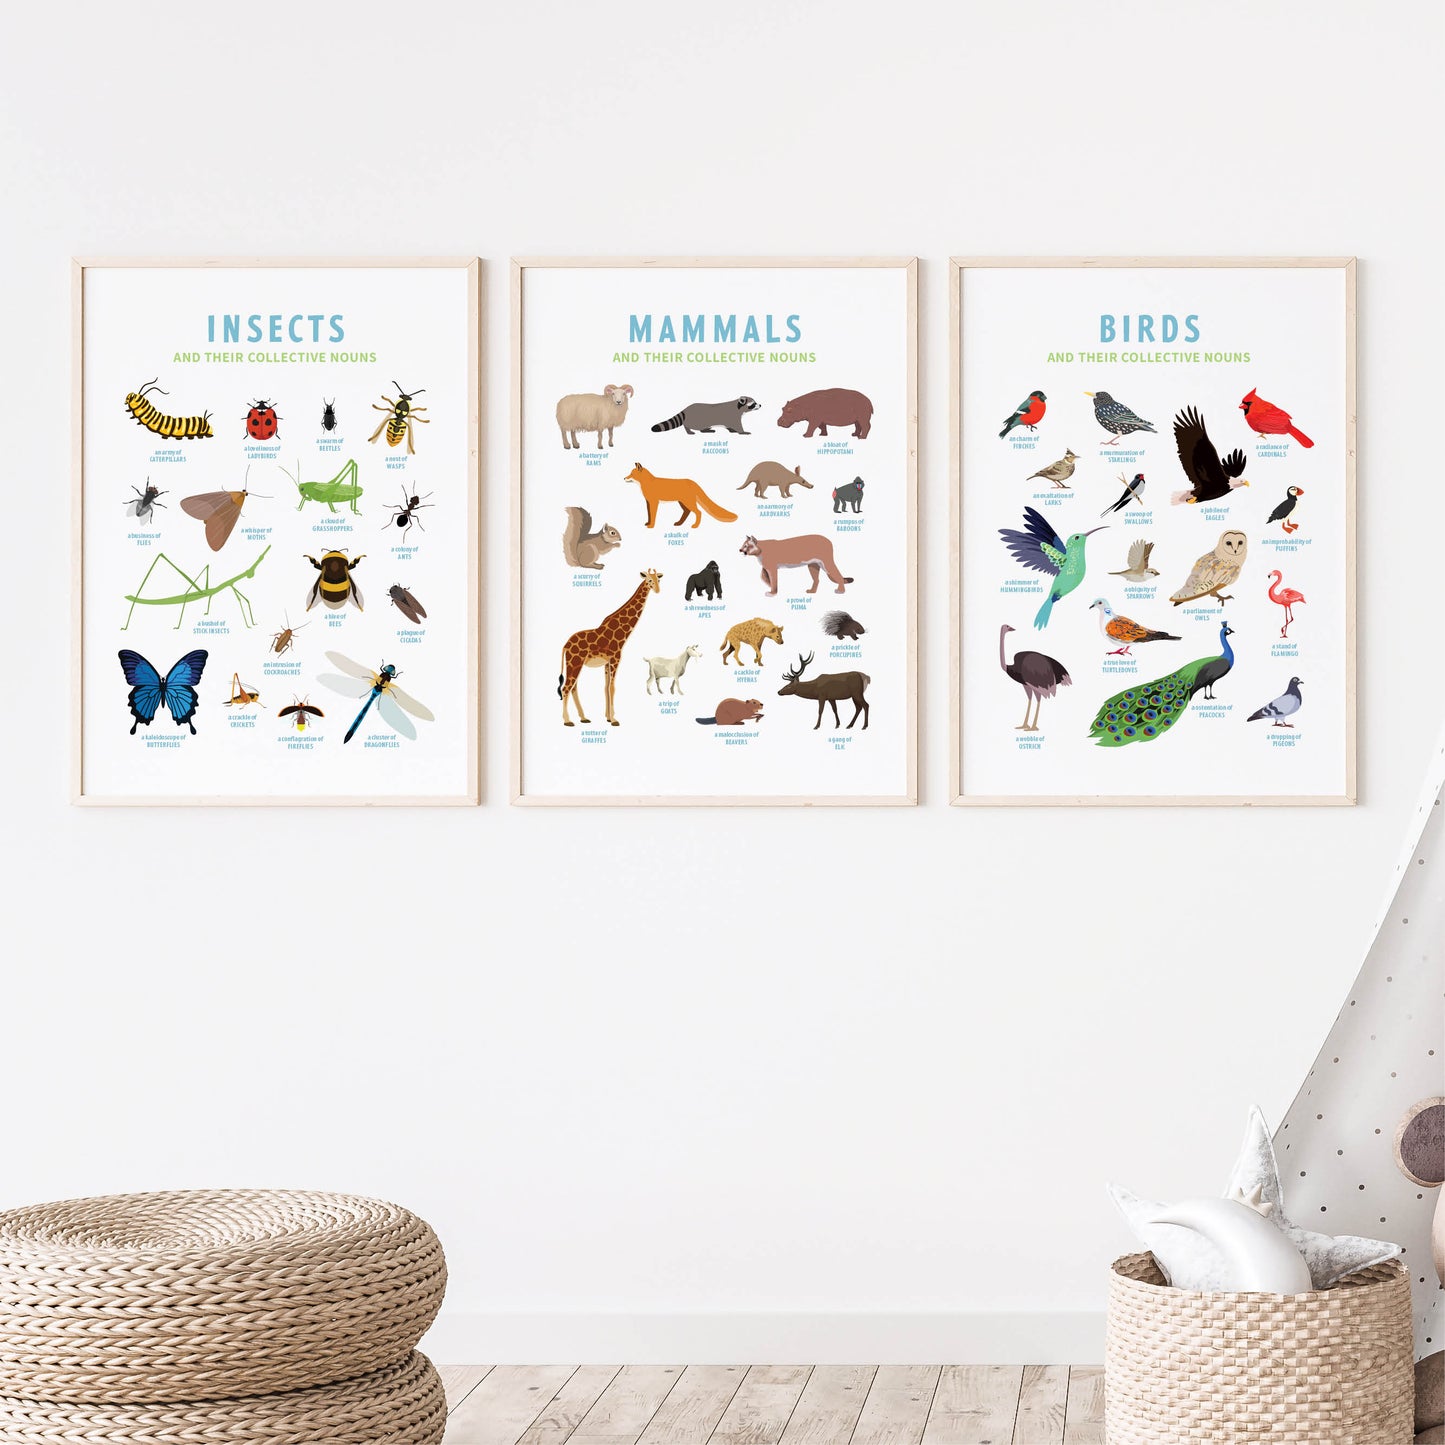 Collective Nouns Poster (Mammals) - digital